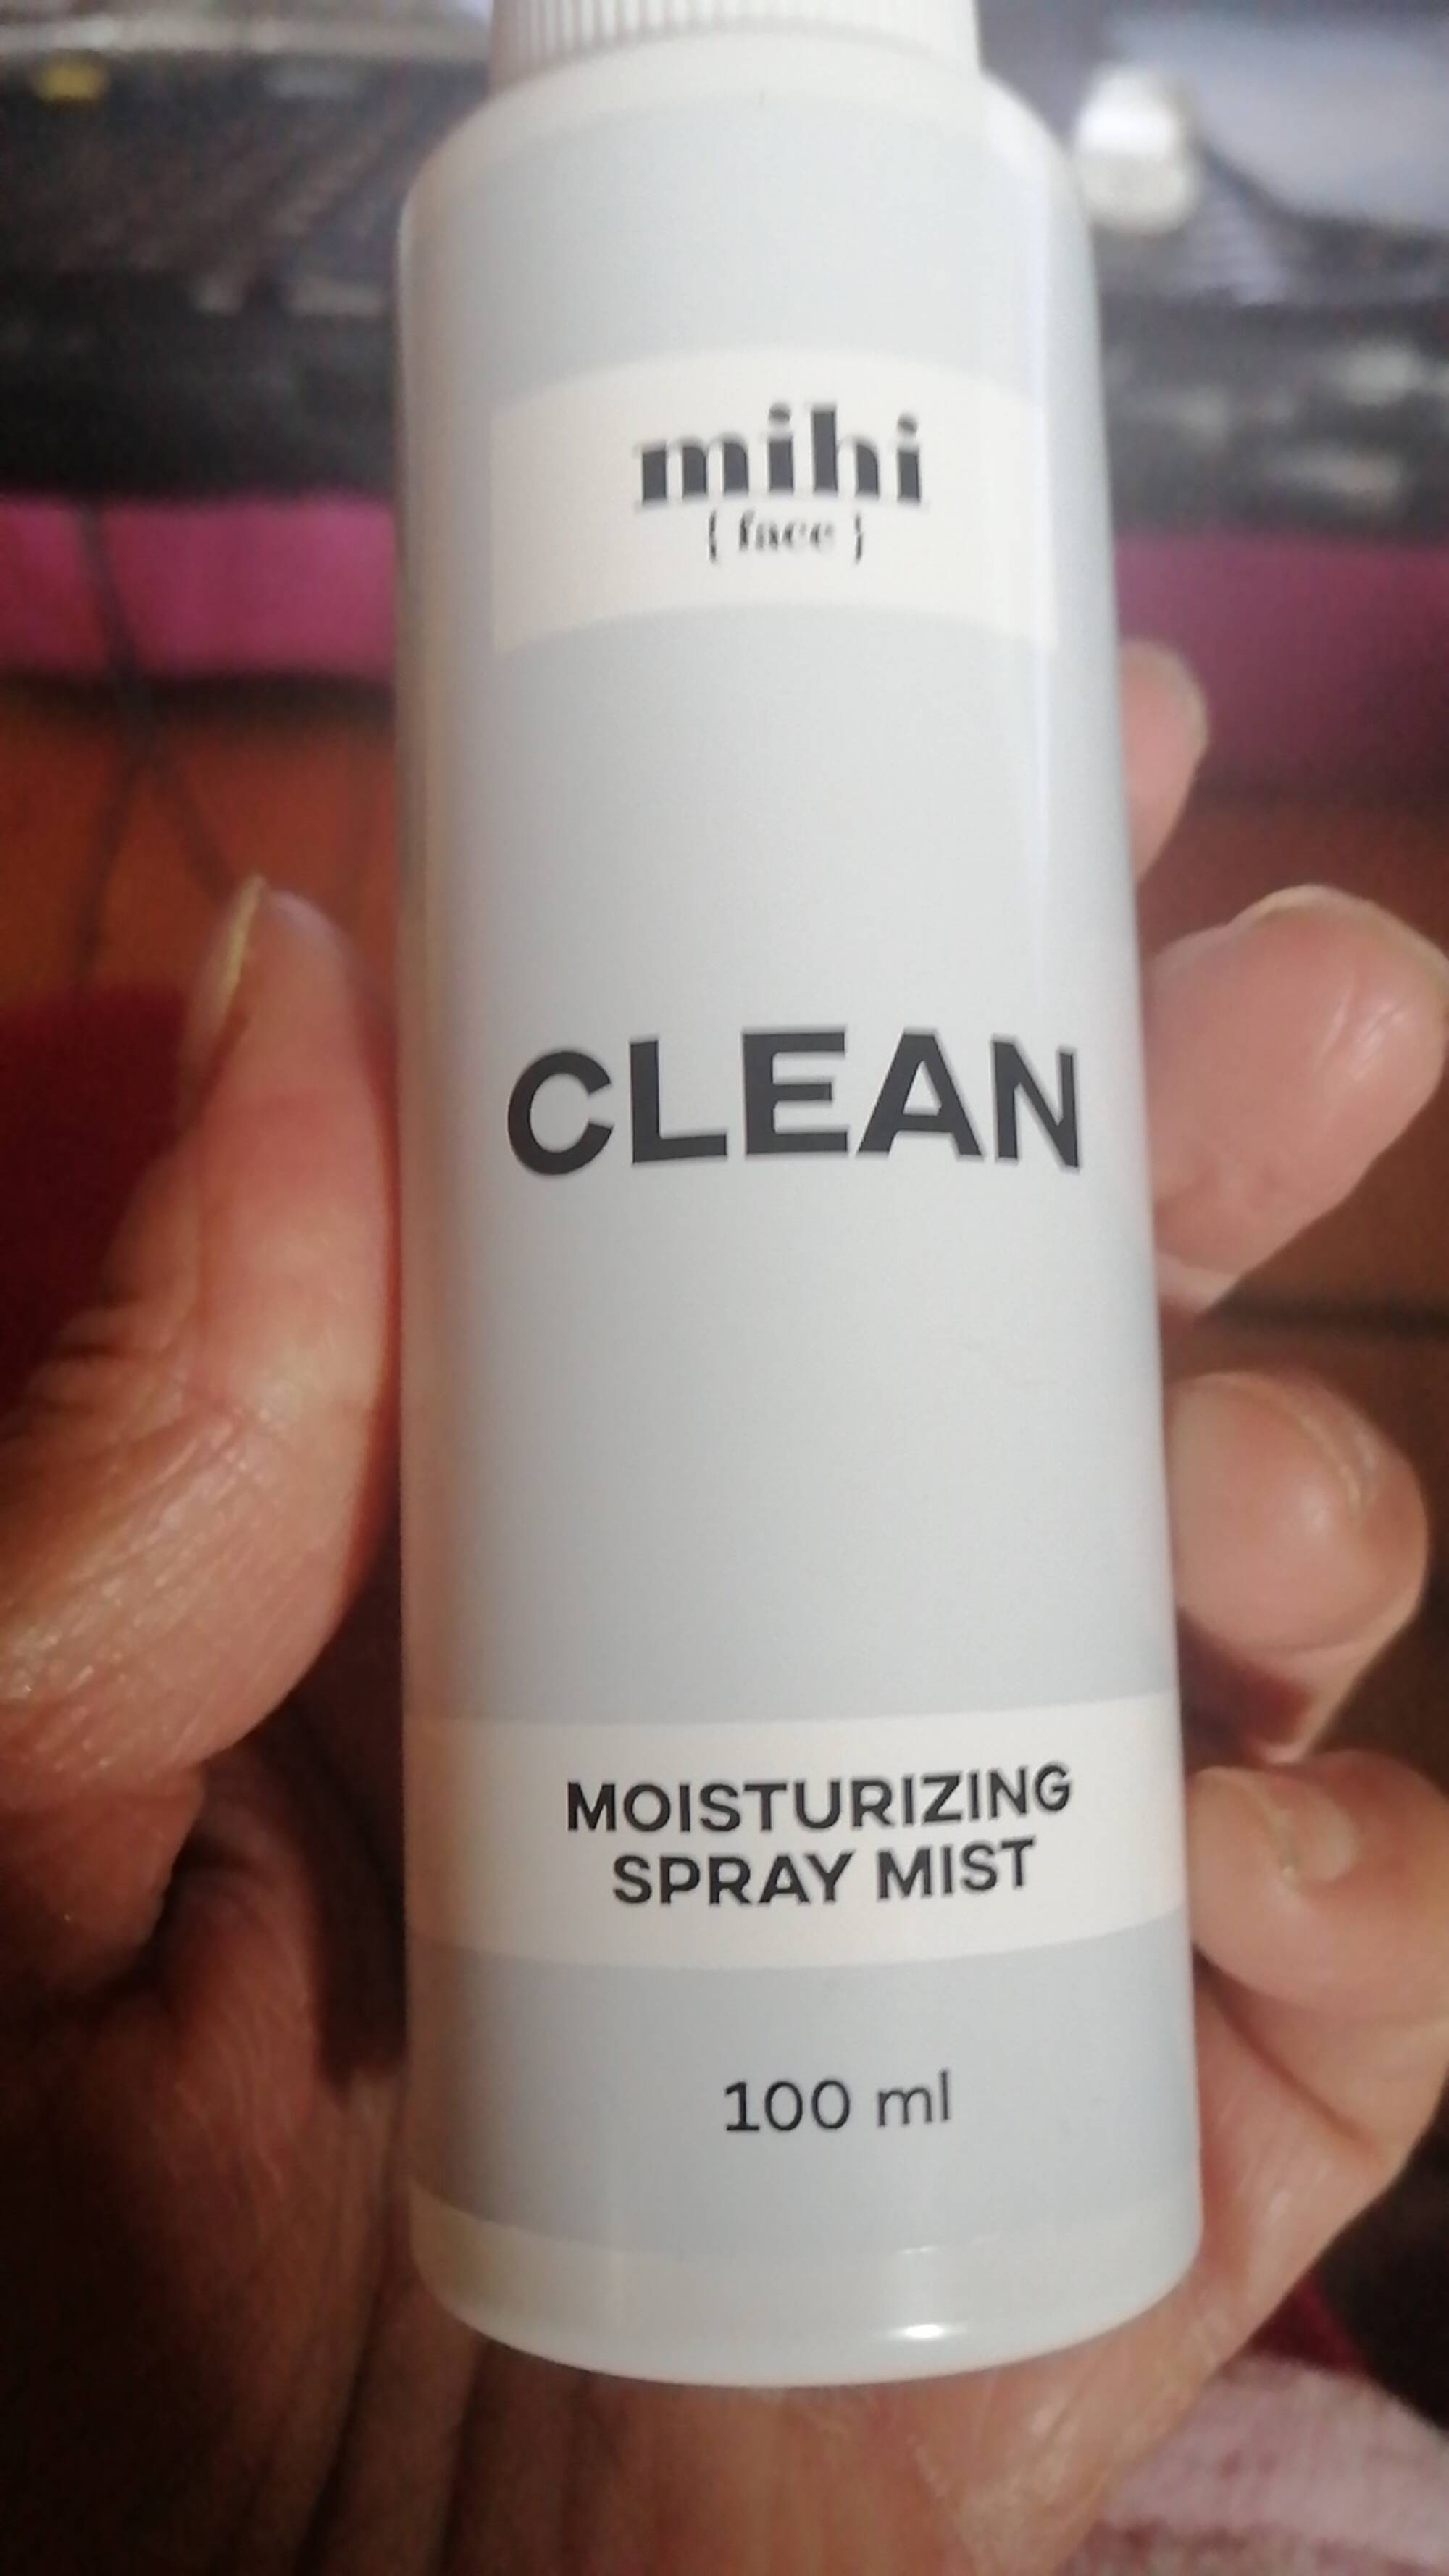 MIHI - Clean - Moisturizing spray mist